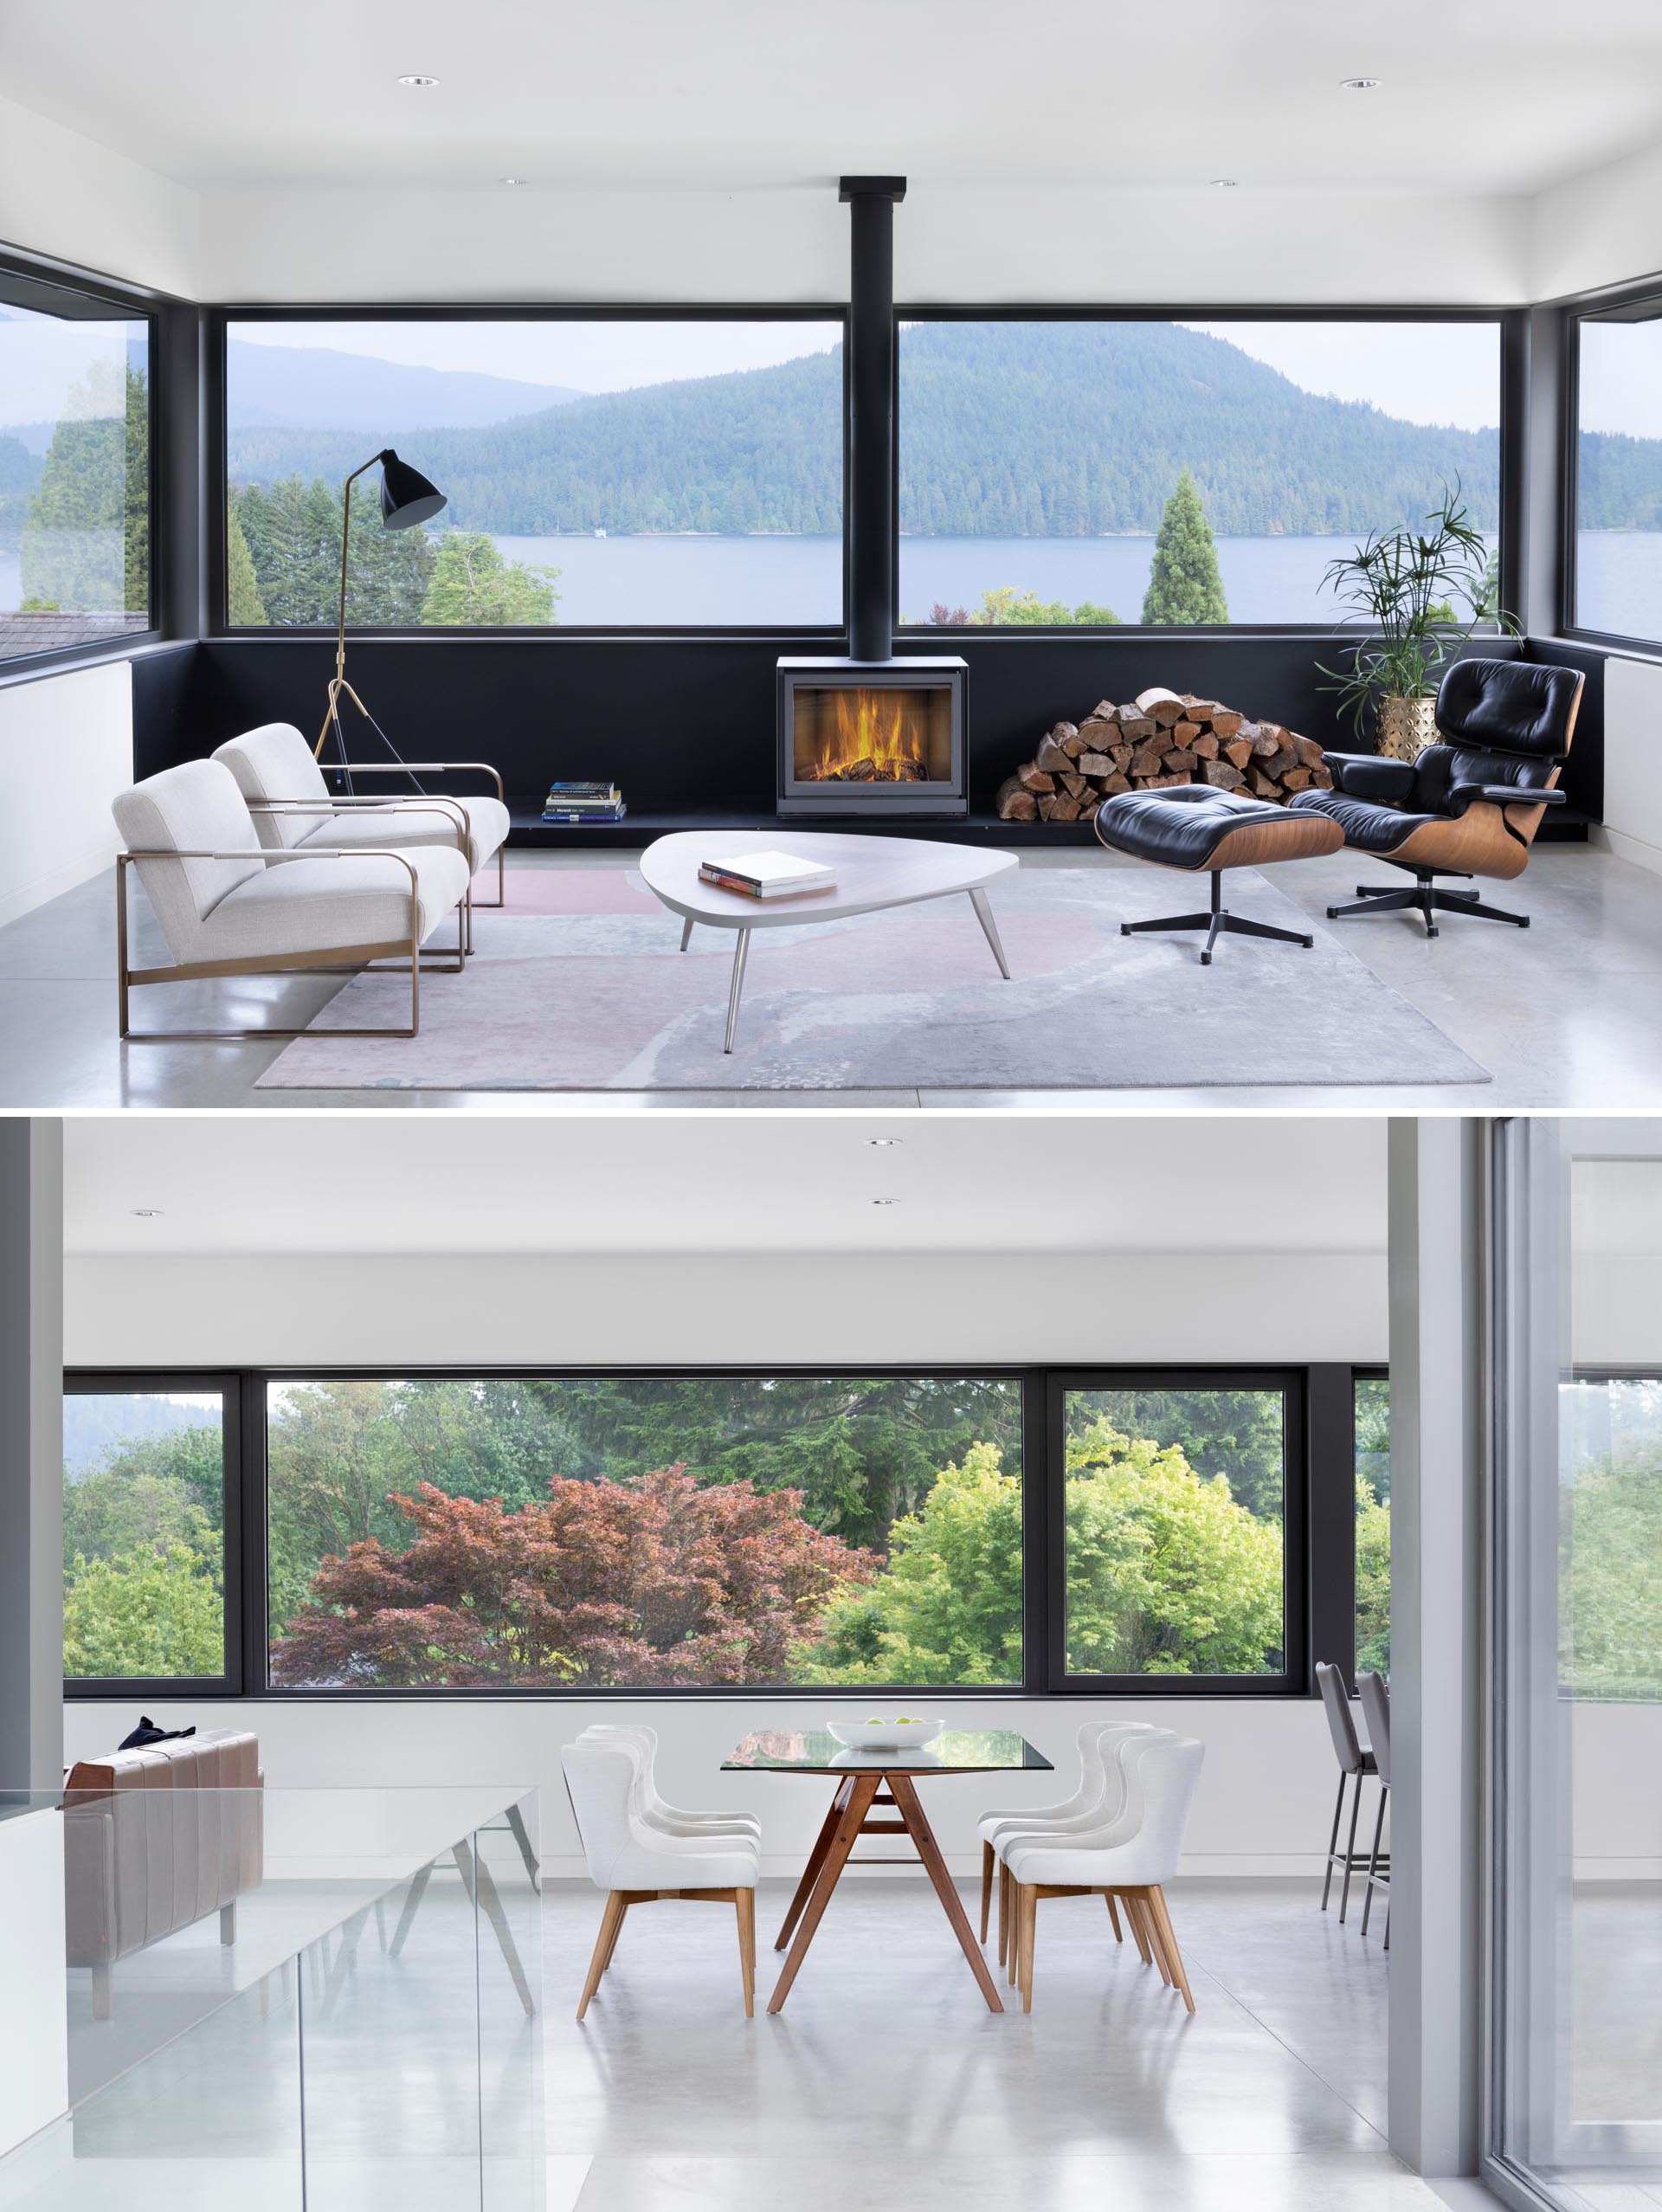 A modern home interior with wrap around windows.